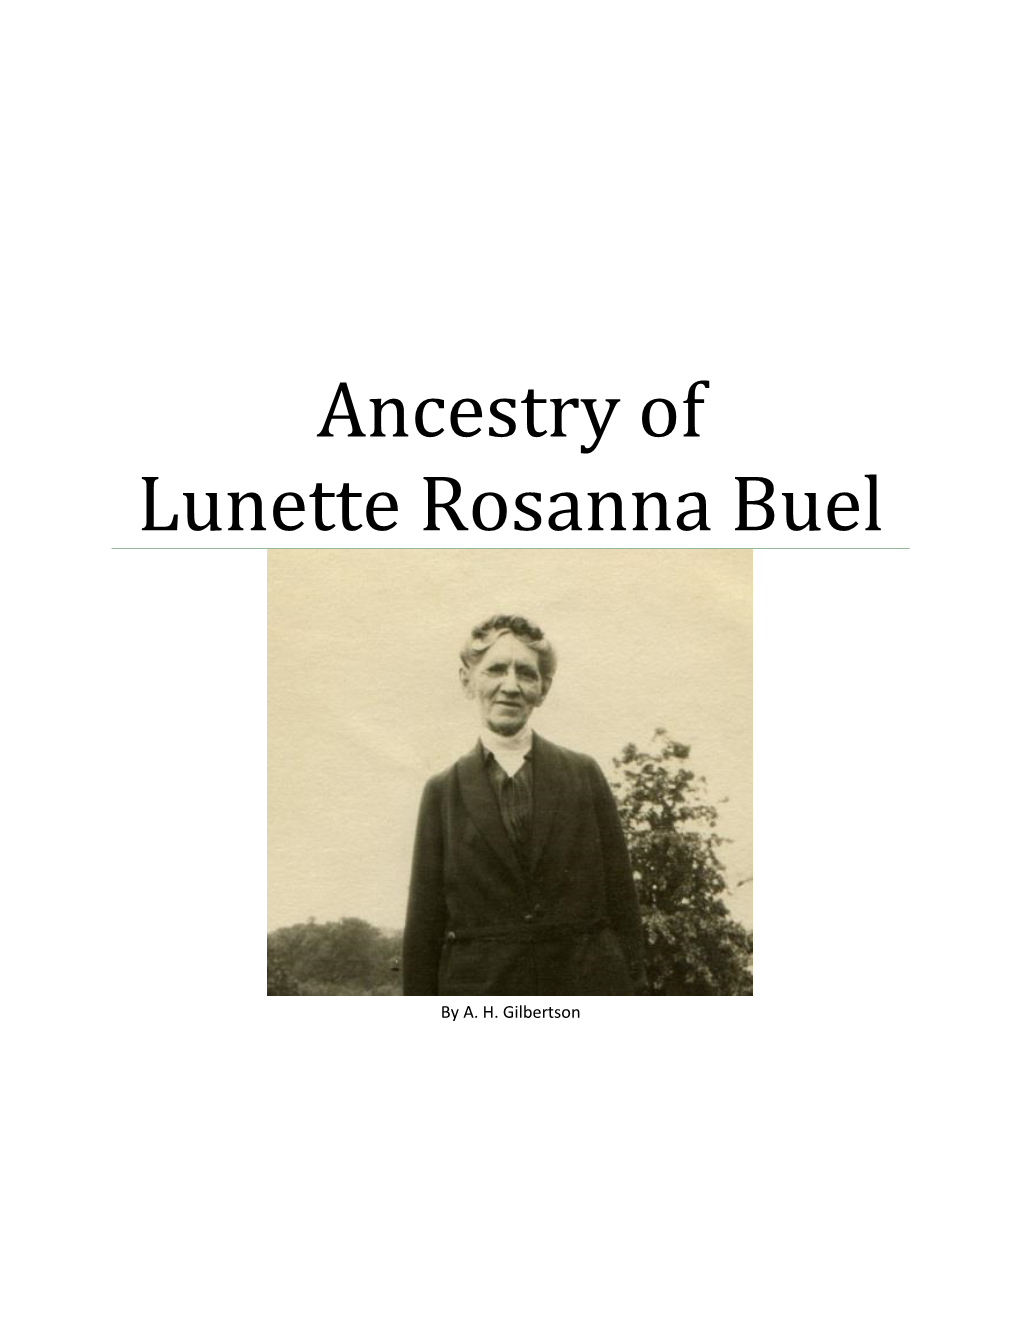 Ancestry of Lunette Rosanna Buel